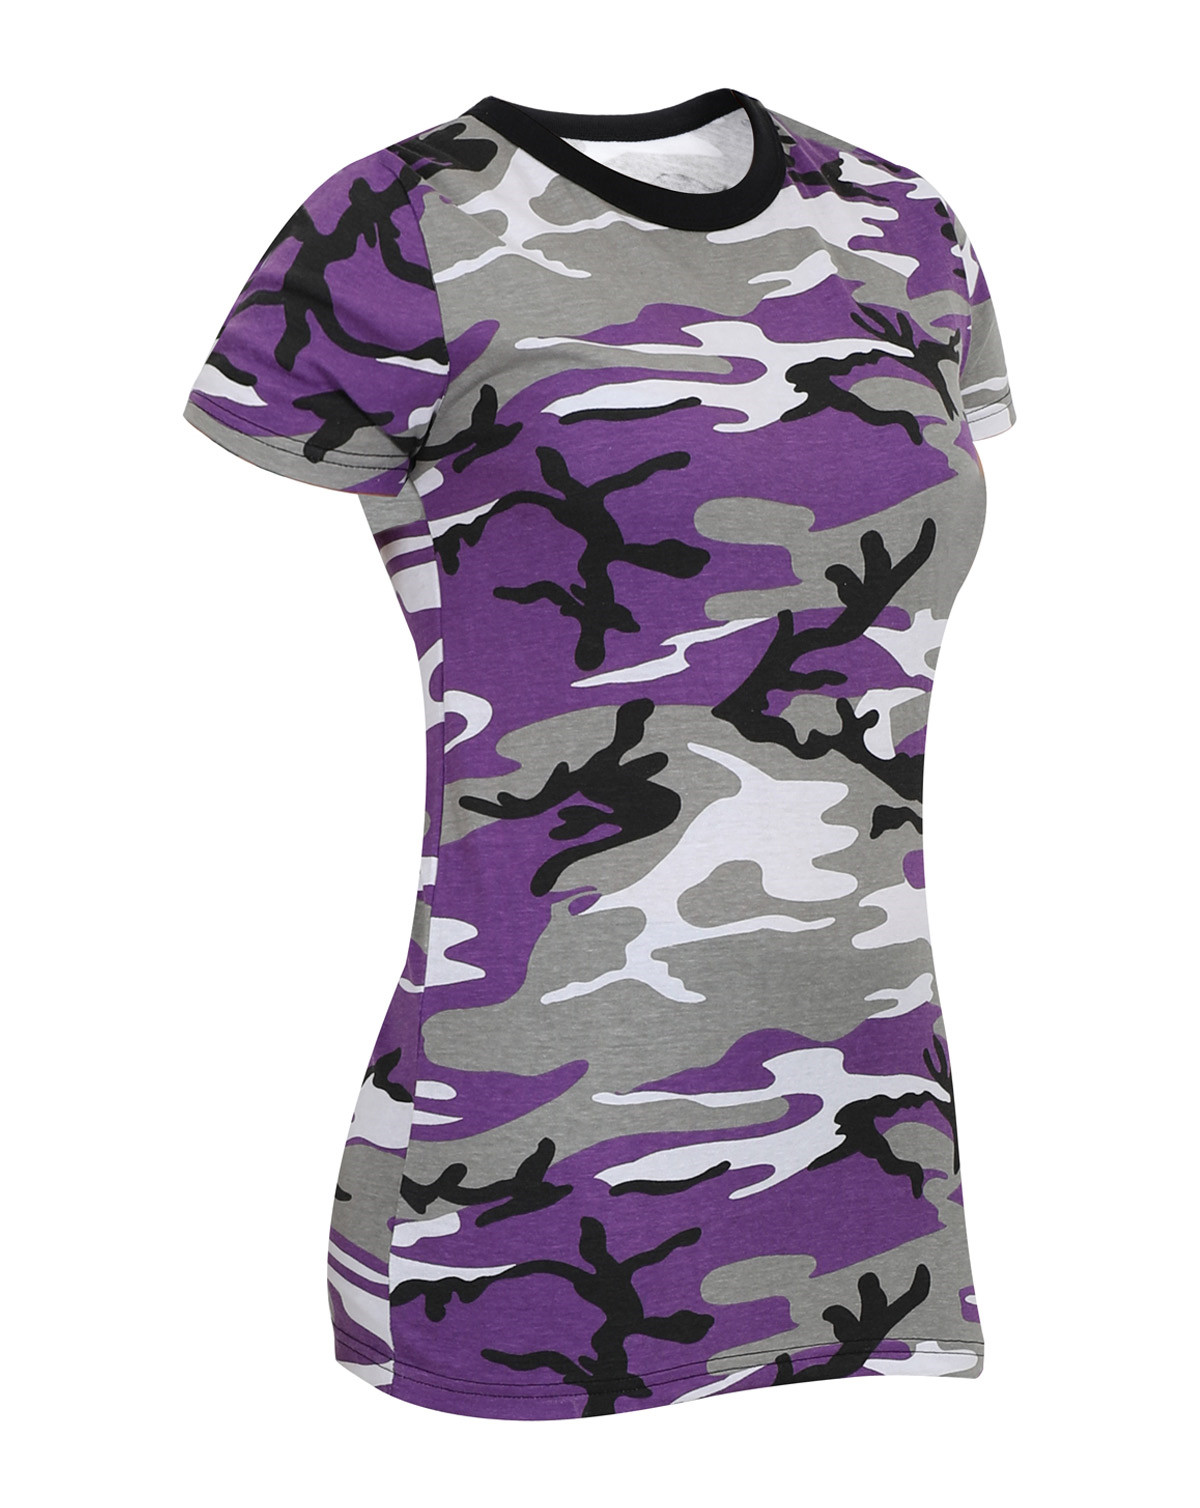 4: Rothco Camouflage T-Shirt (Lilla Camo, XL)